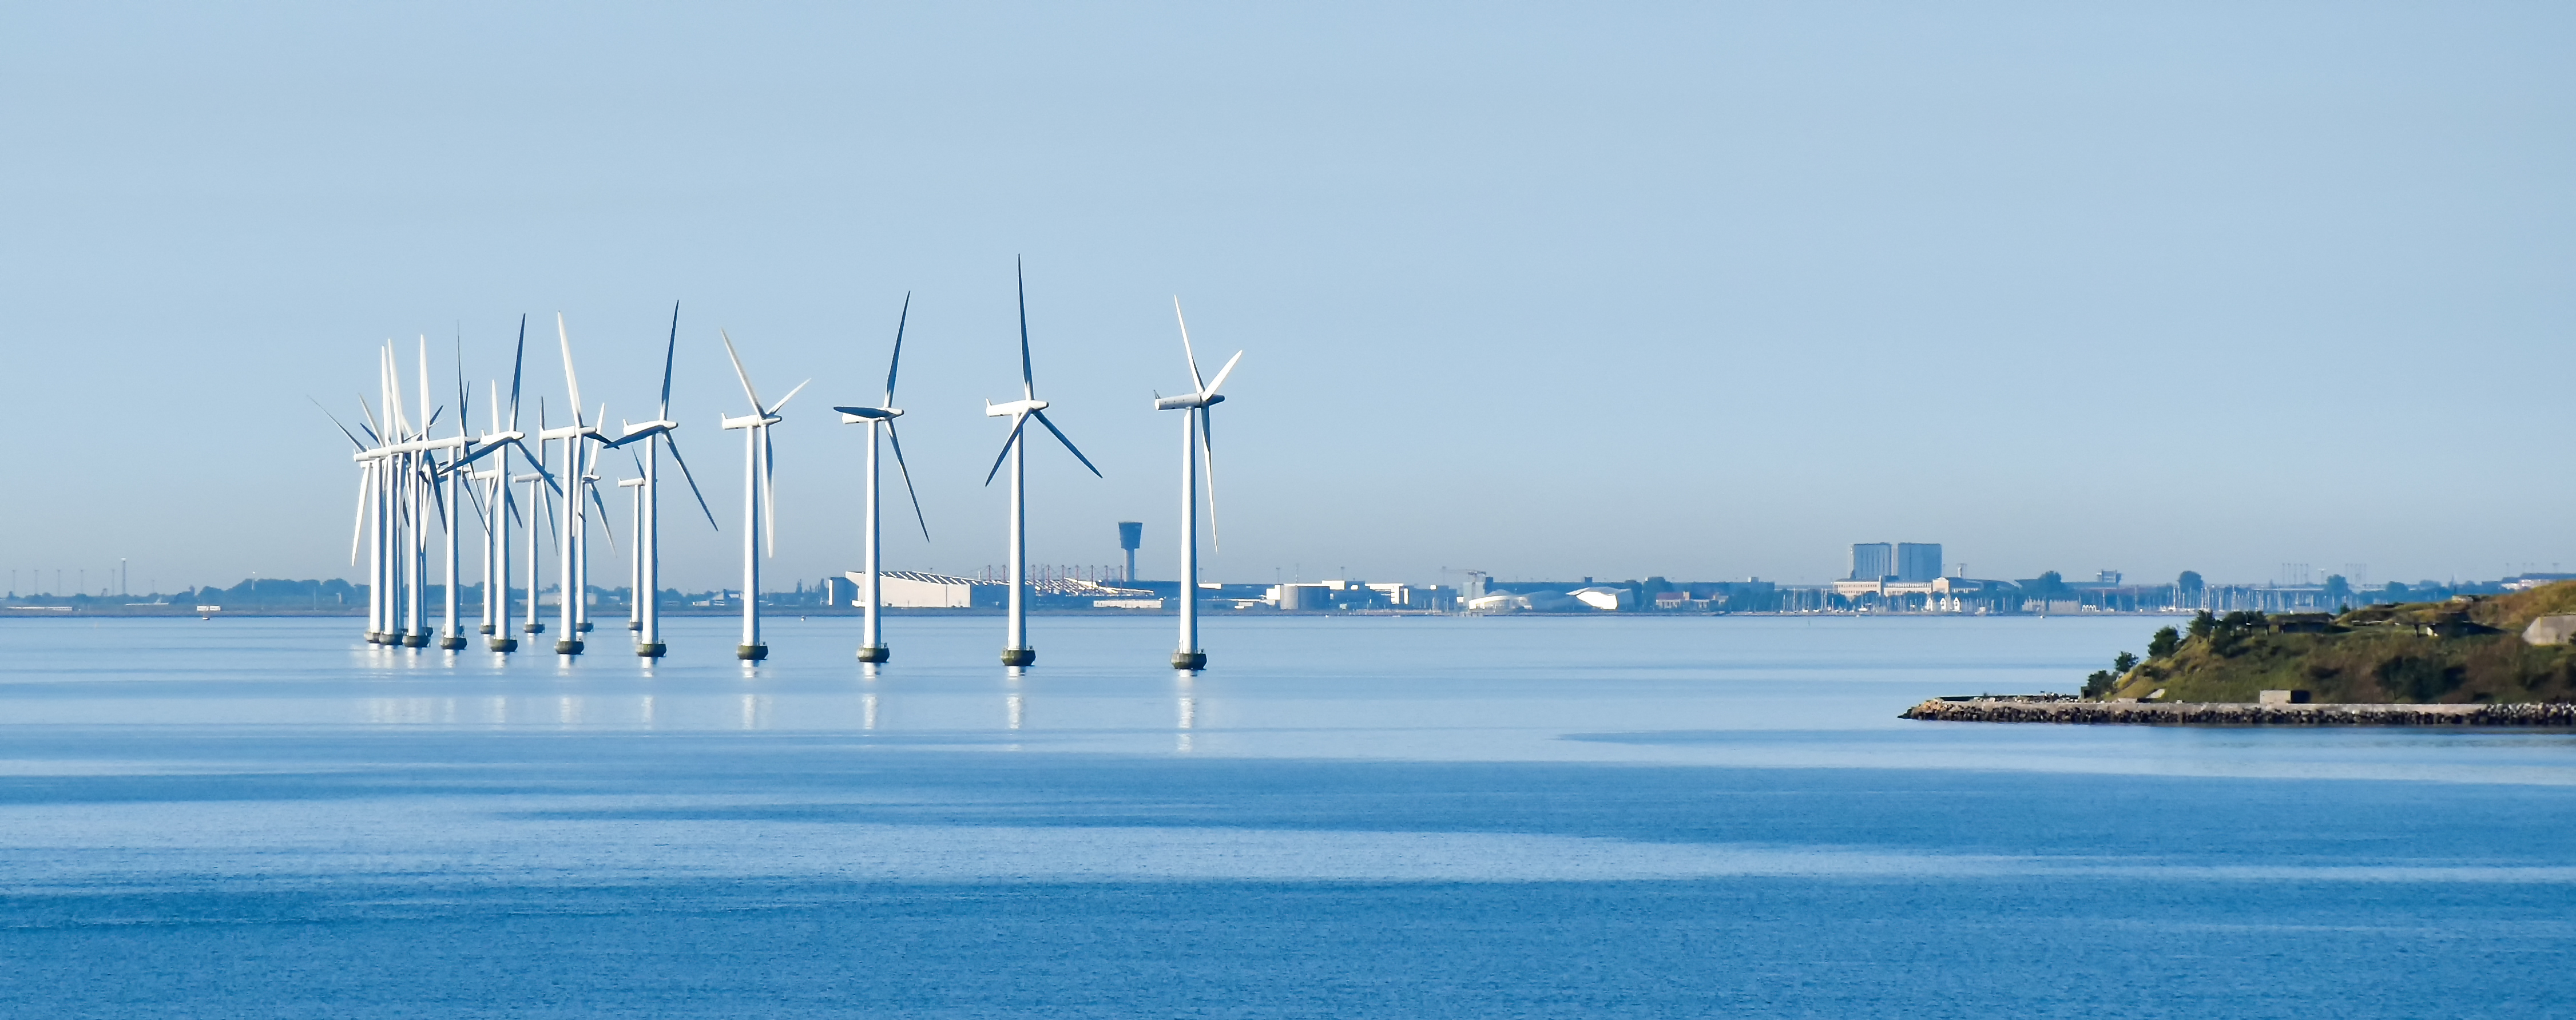 Offshore wind - Denmark